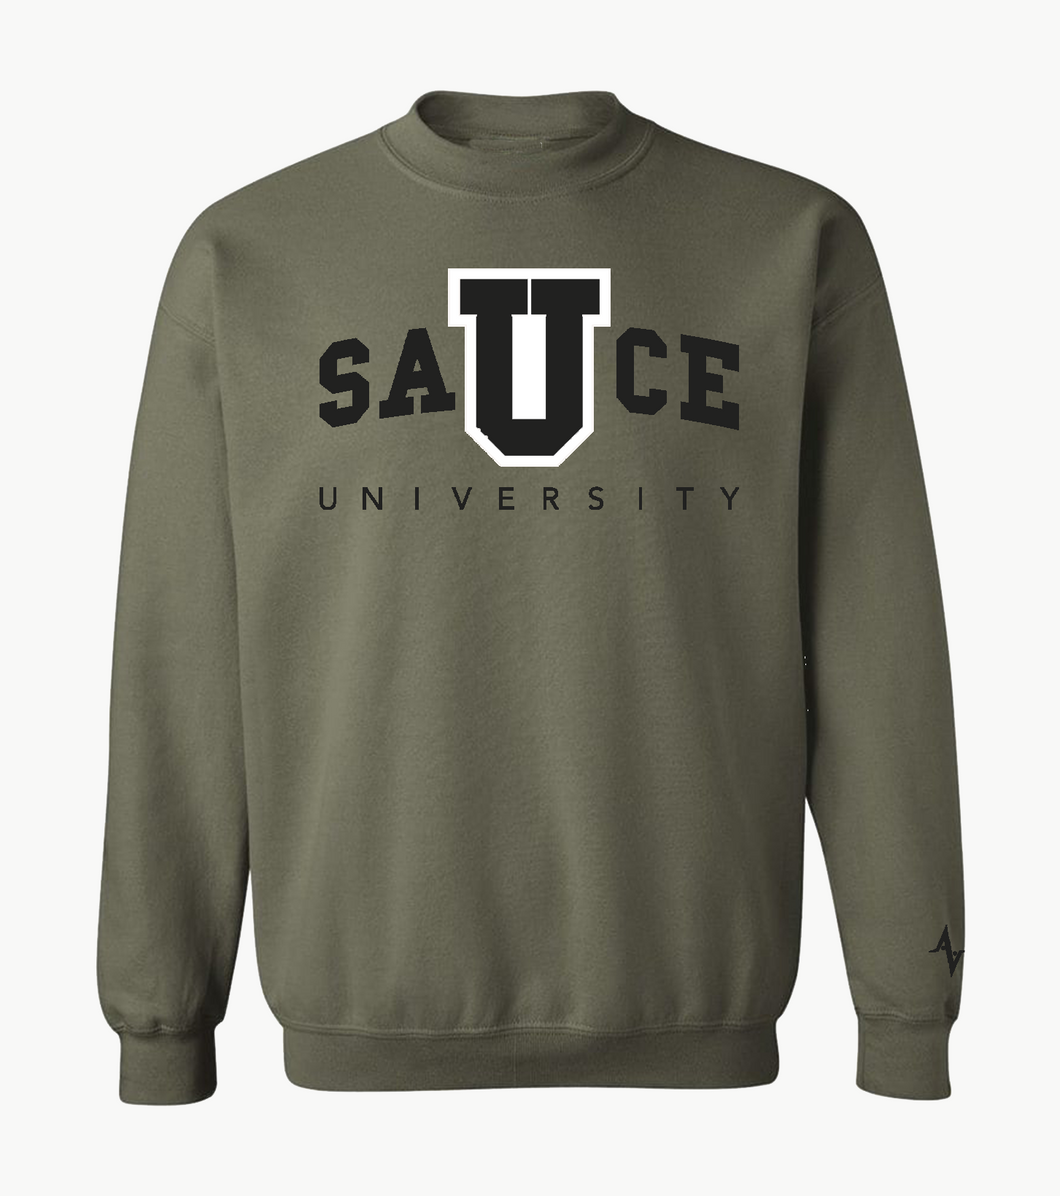 Sauce University Olive Green Crew Neck Sweater